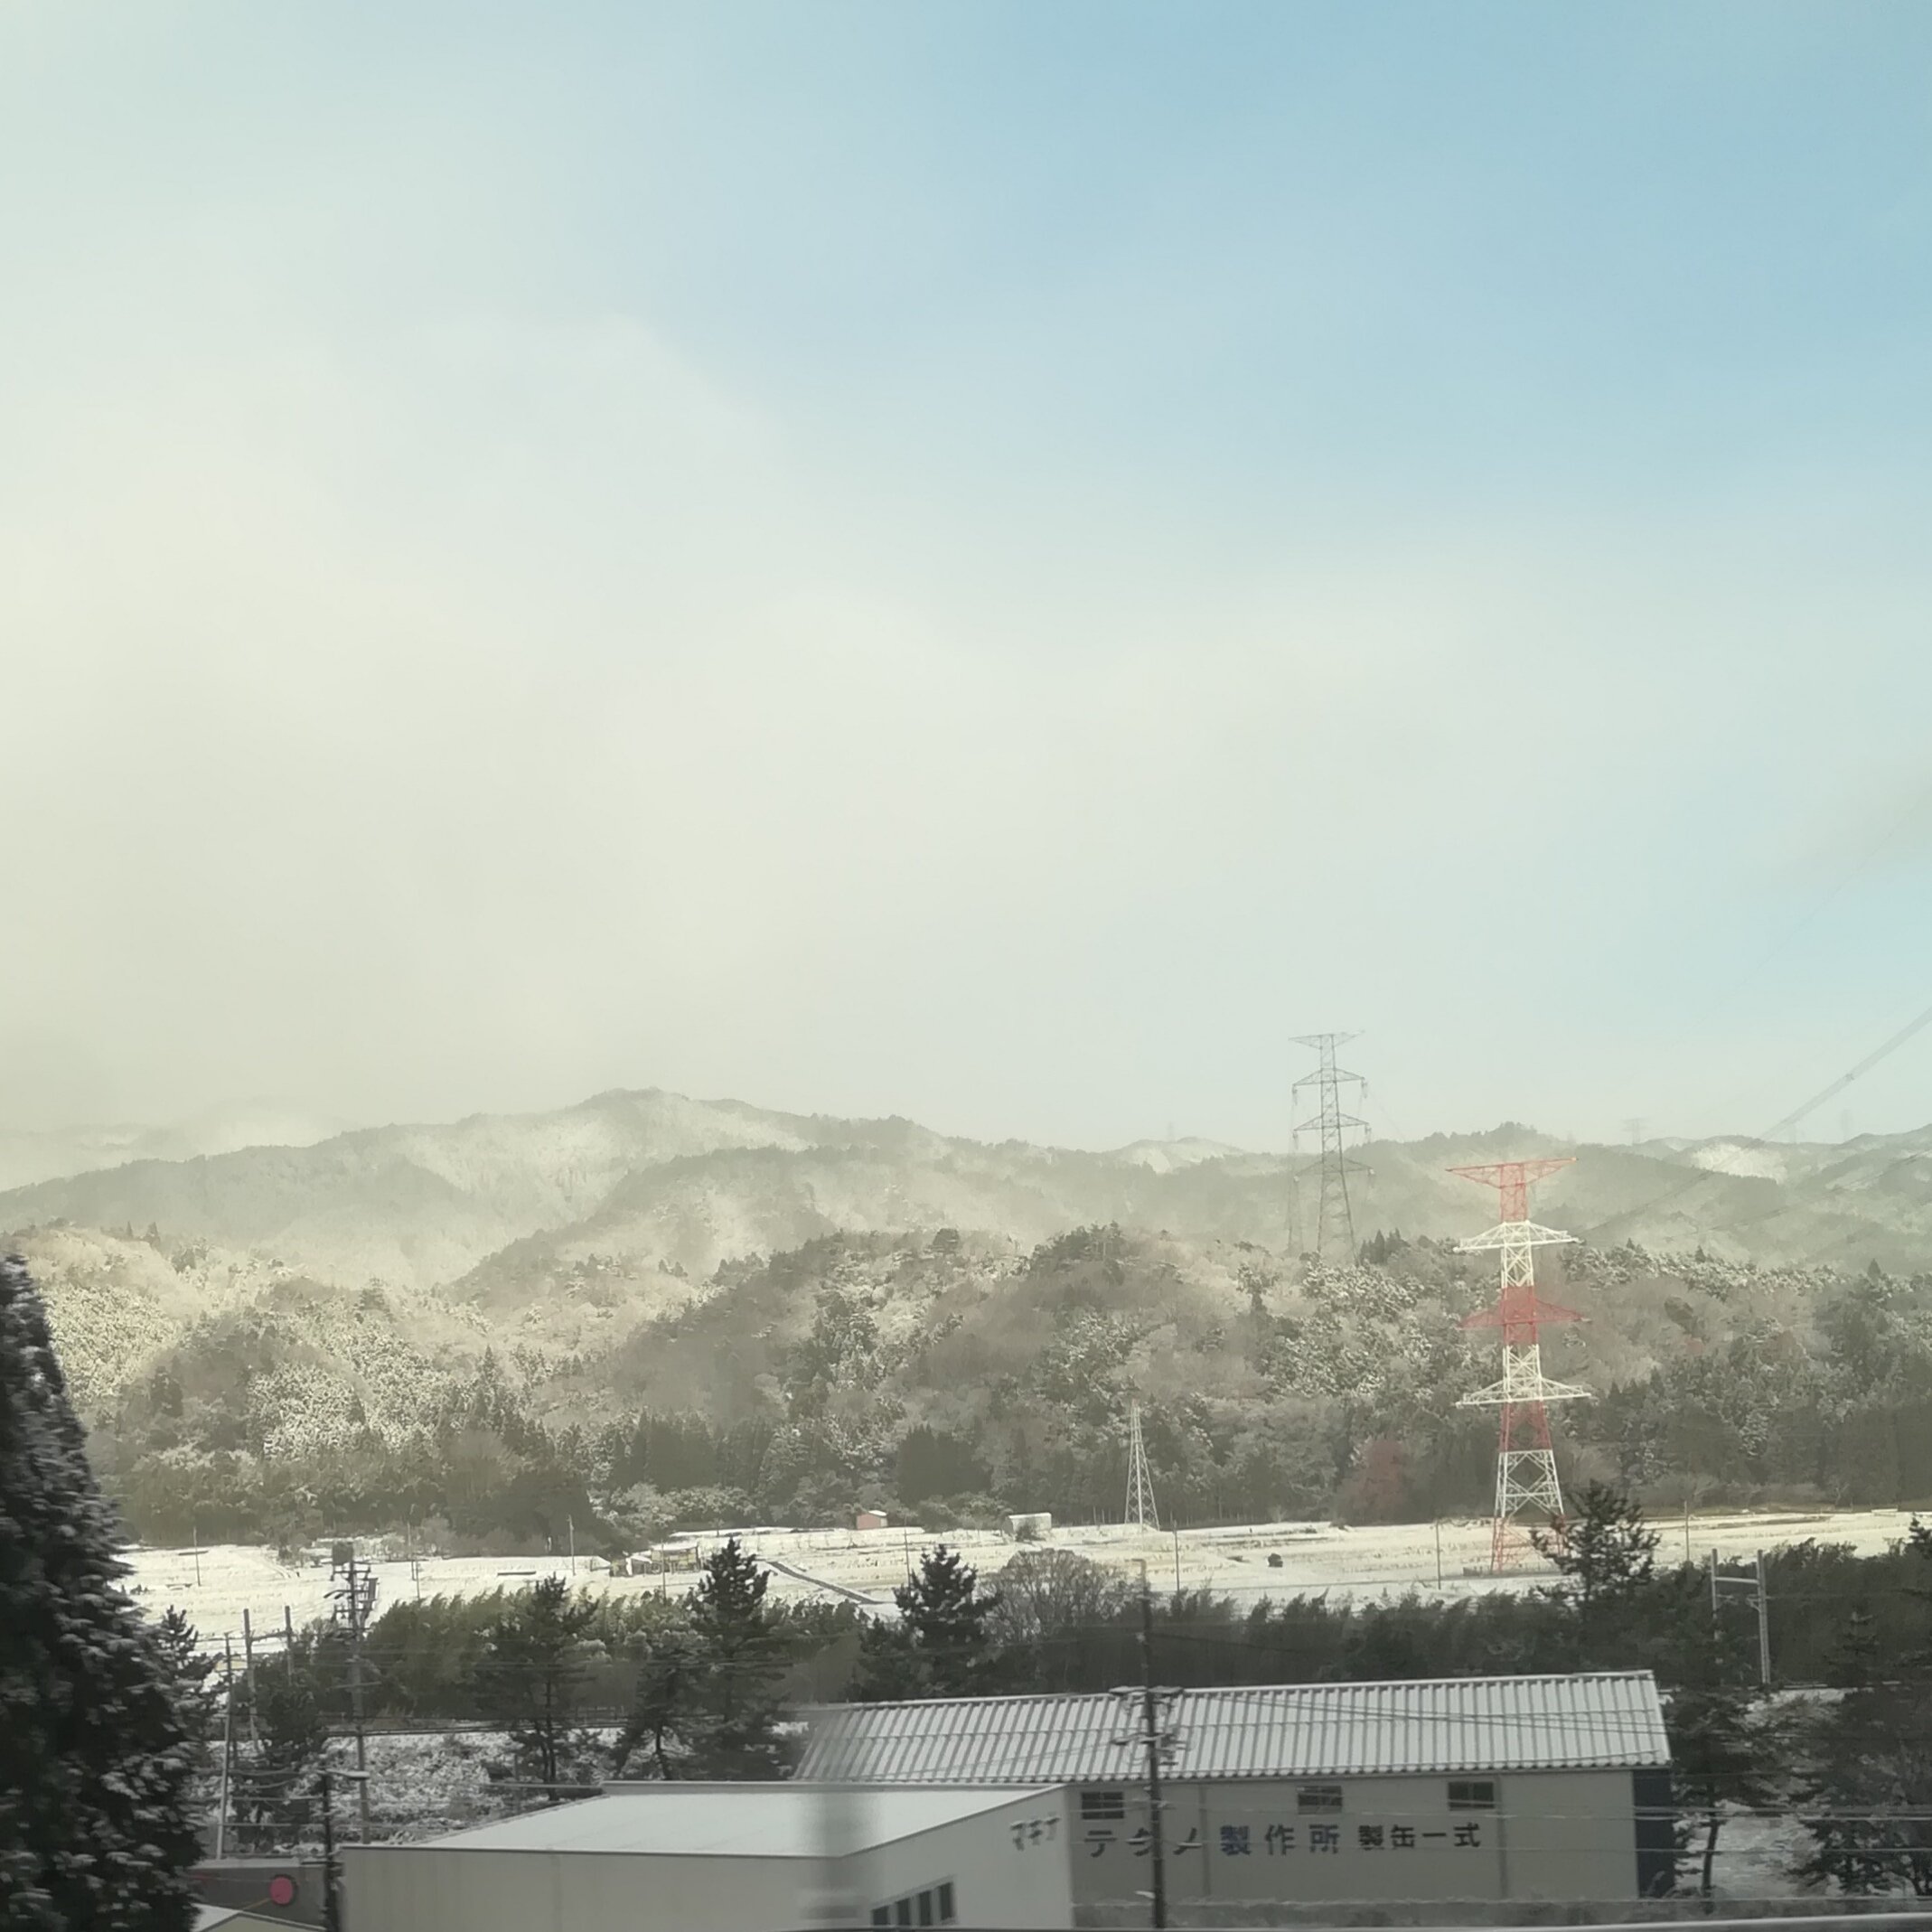 Gifu, area of snow, view from Shinkansen bullet train, Japan